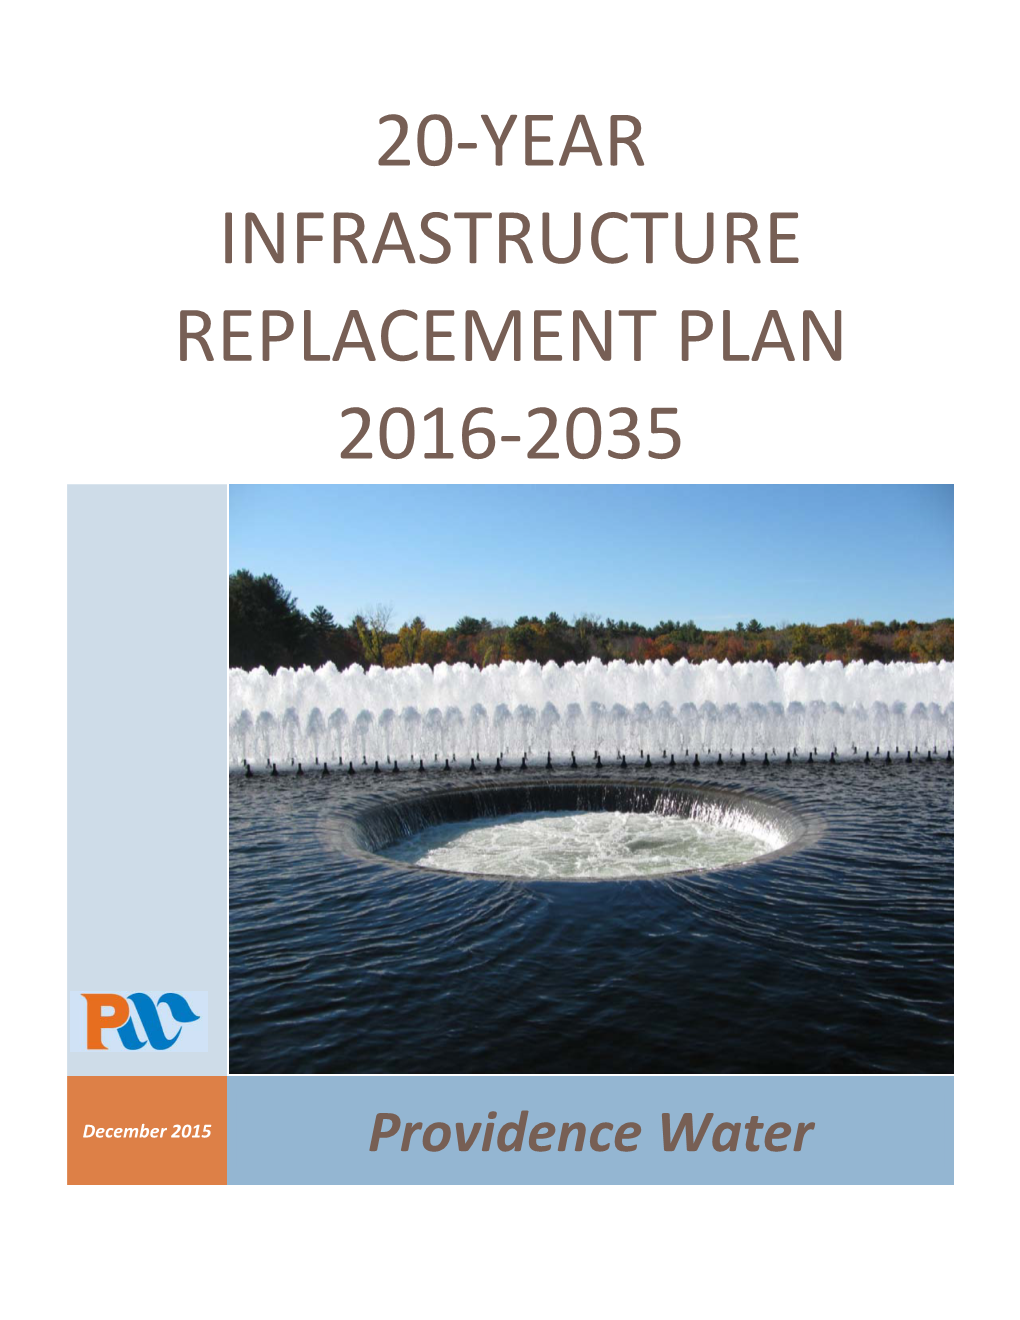 Water Main Rehabilitation Plan and Schedule ‐ Exhibit 9